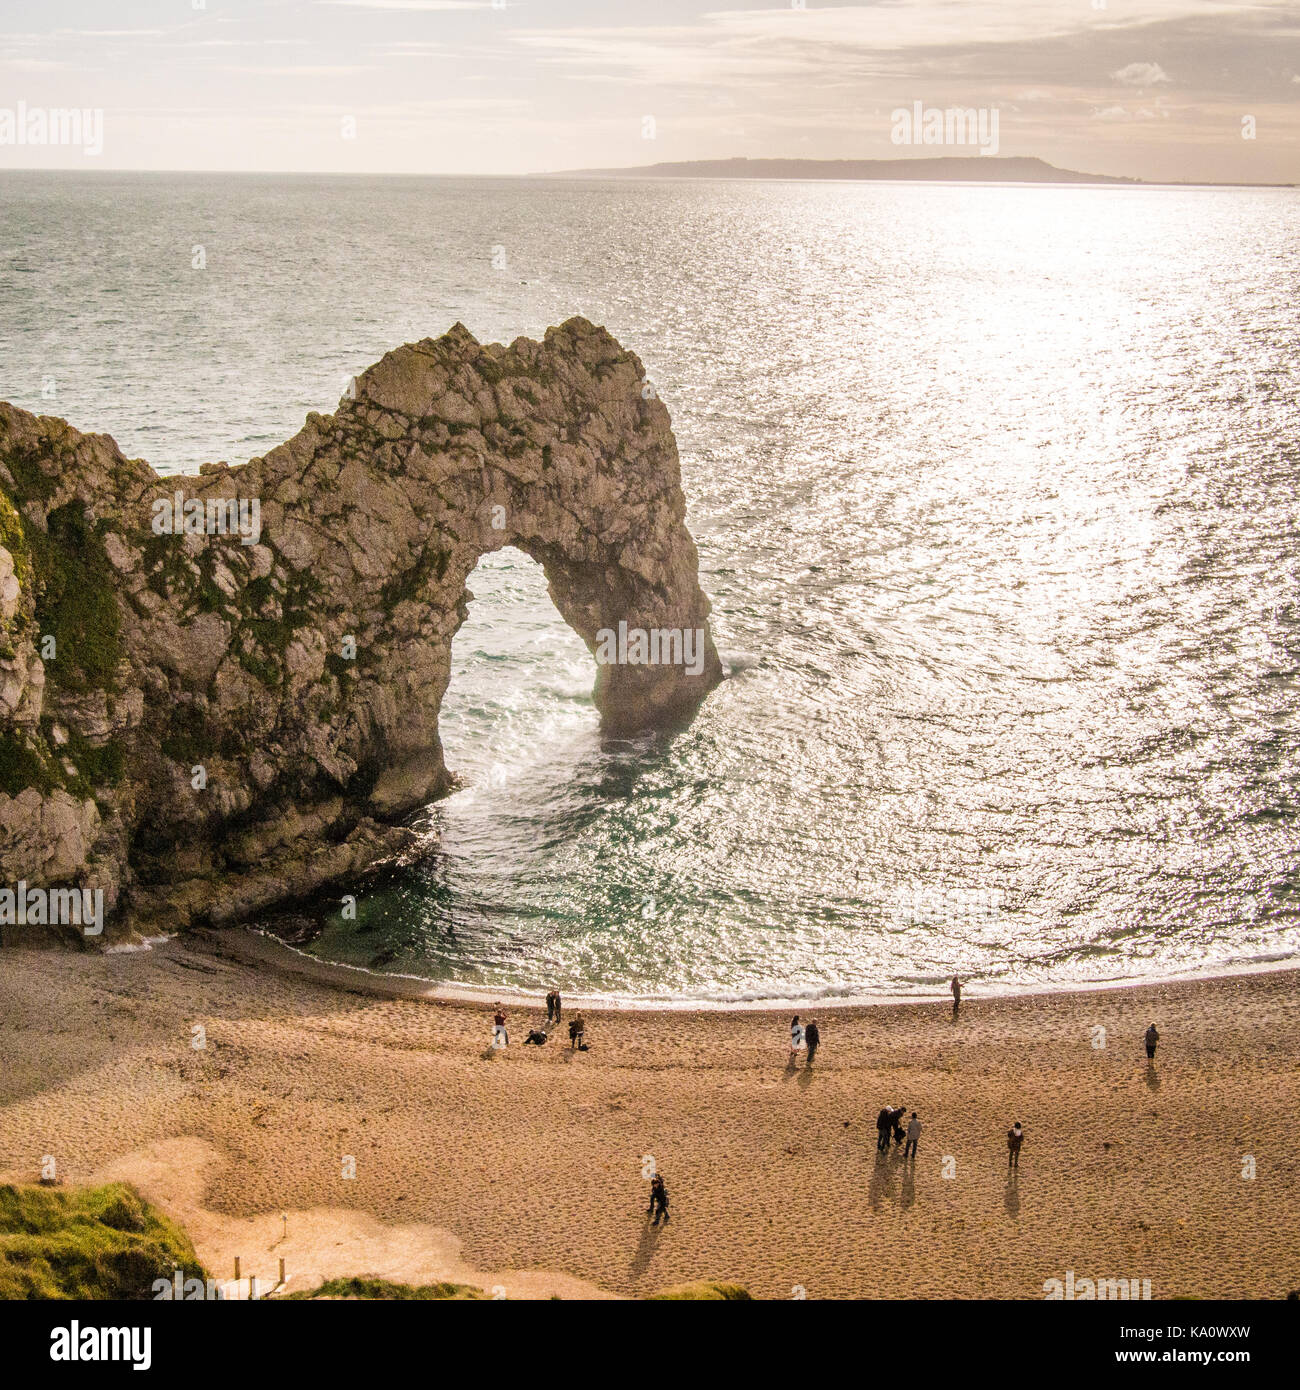 'Durdle Door' (a natural limestone arch) on the Jurassic Coast near Lulworth, Dorset, England Stock Photo